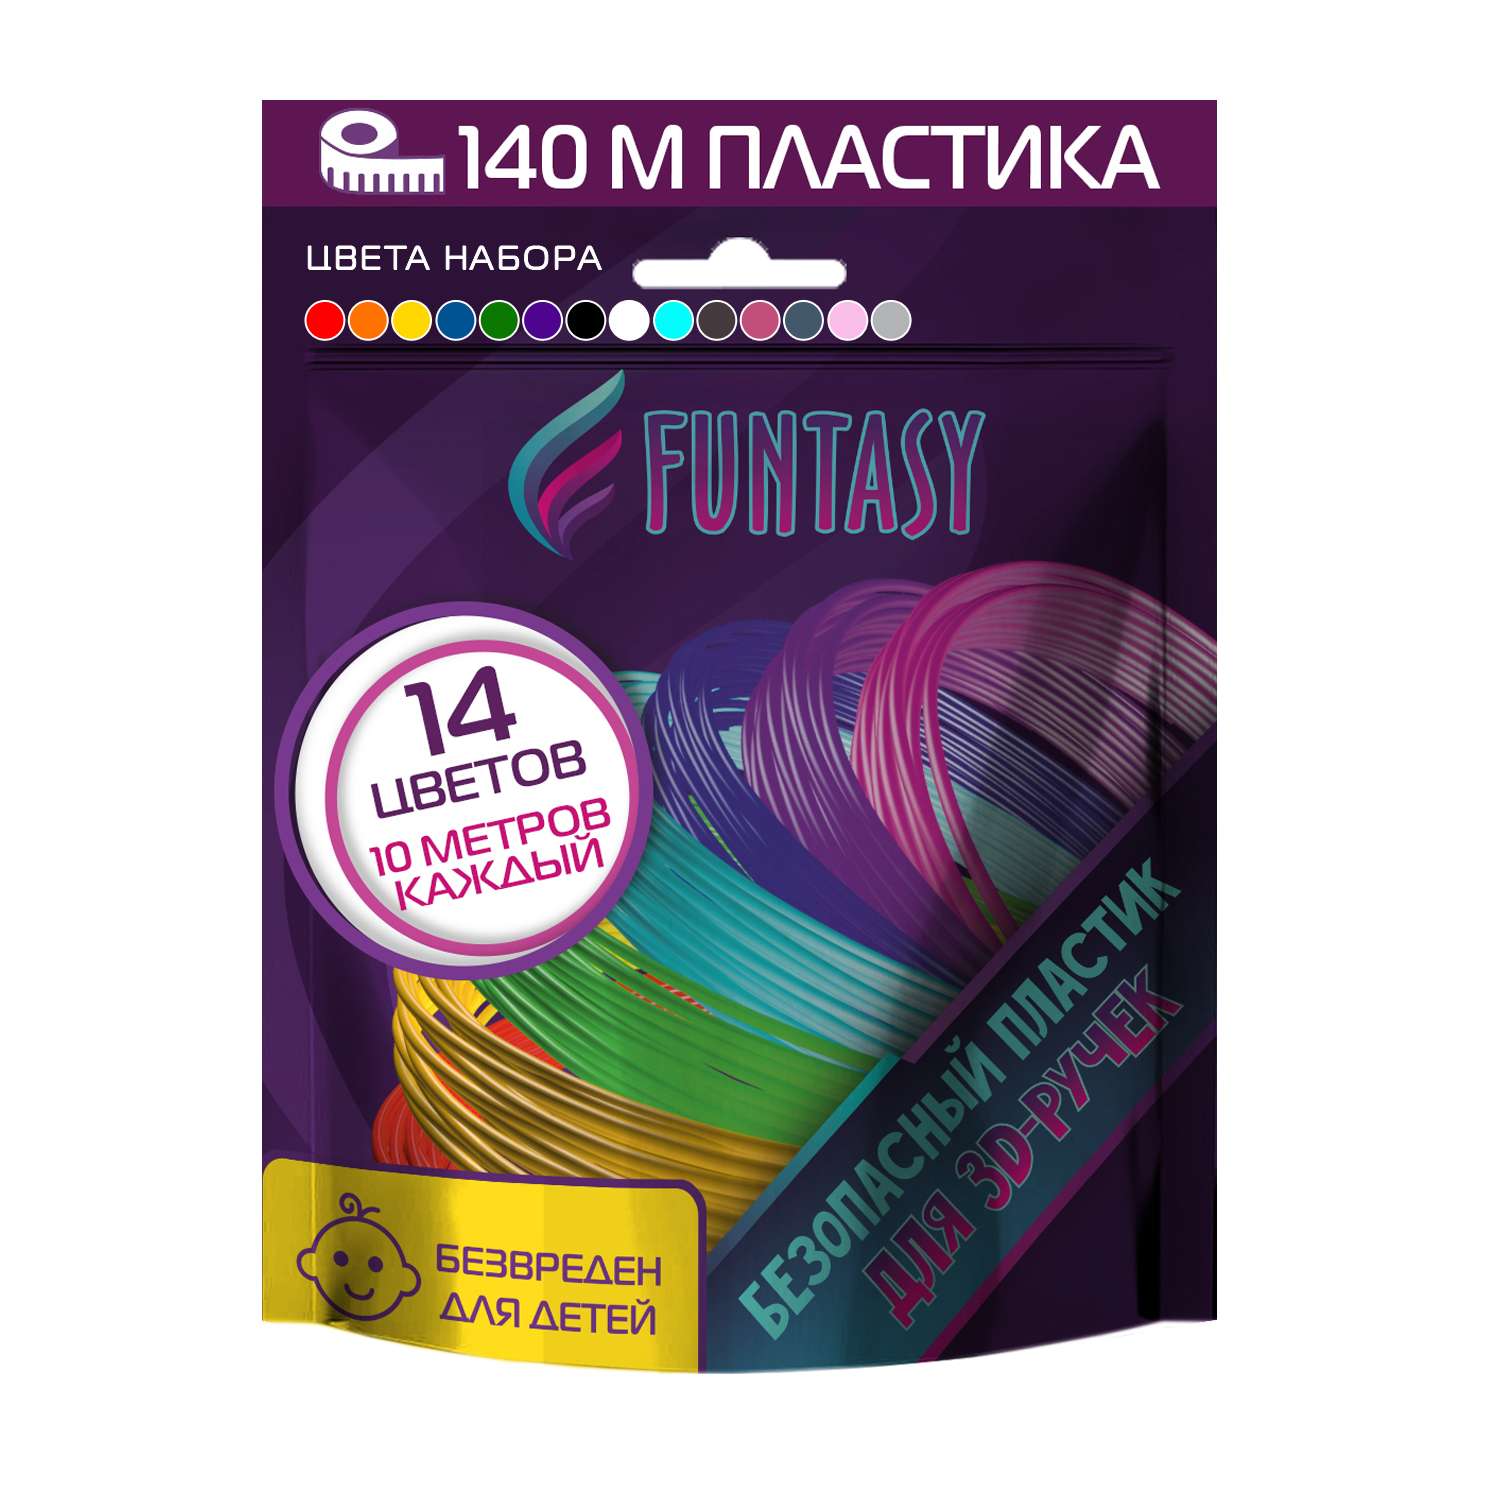 Пластик PLA для 3d ручки Funtasy 14 цветов по 10 метров - фото 1